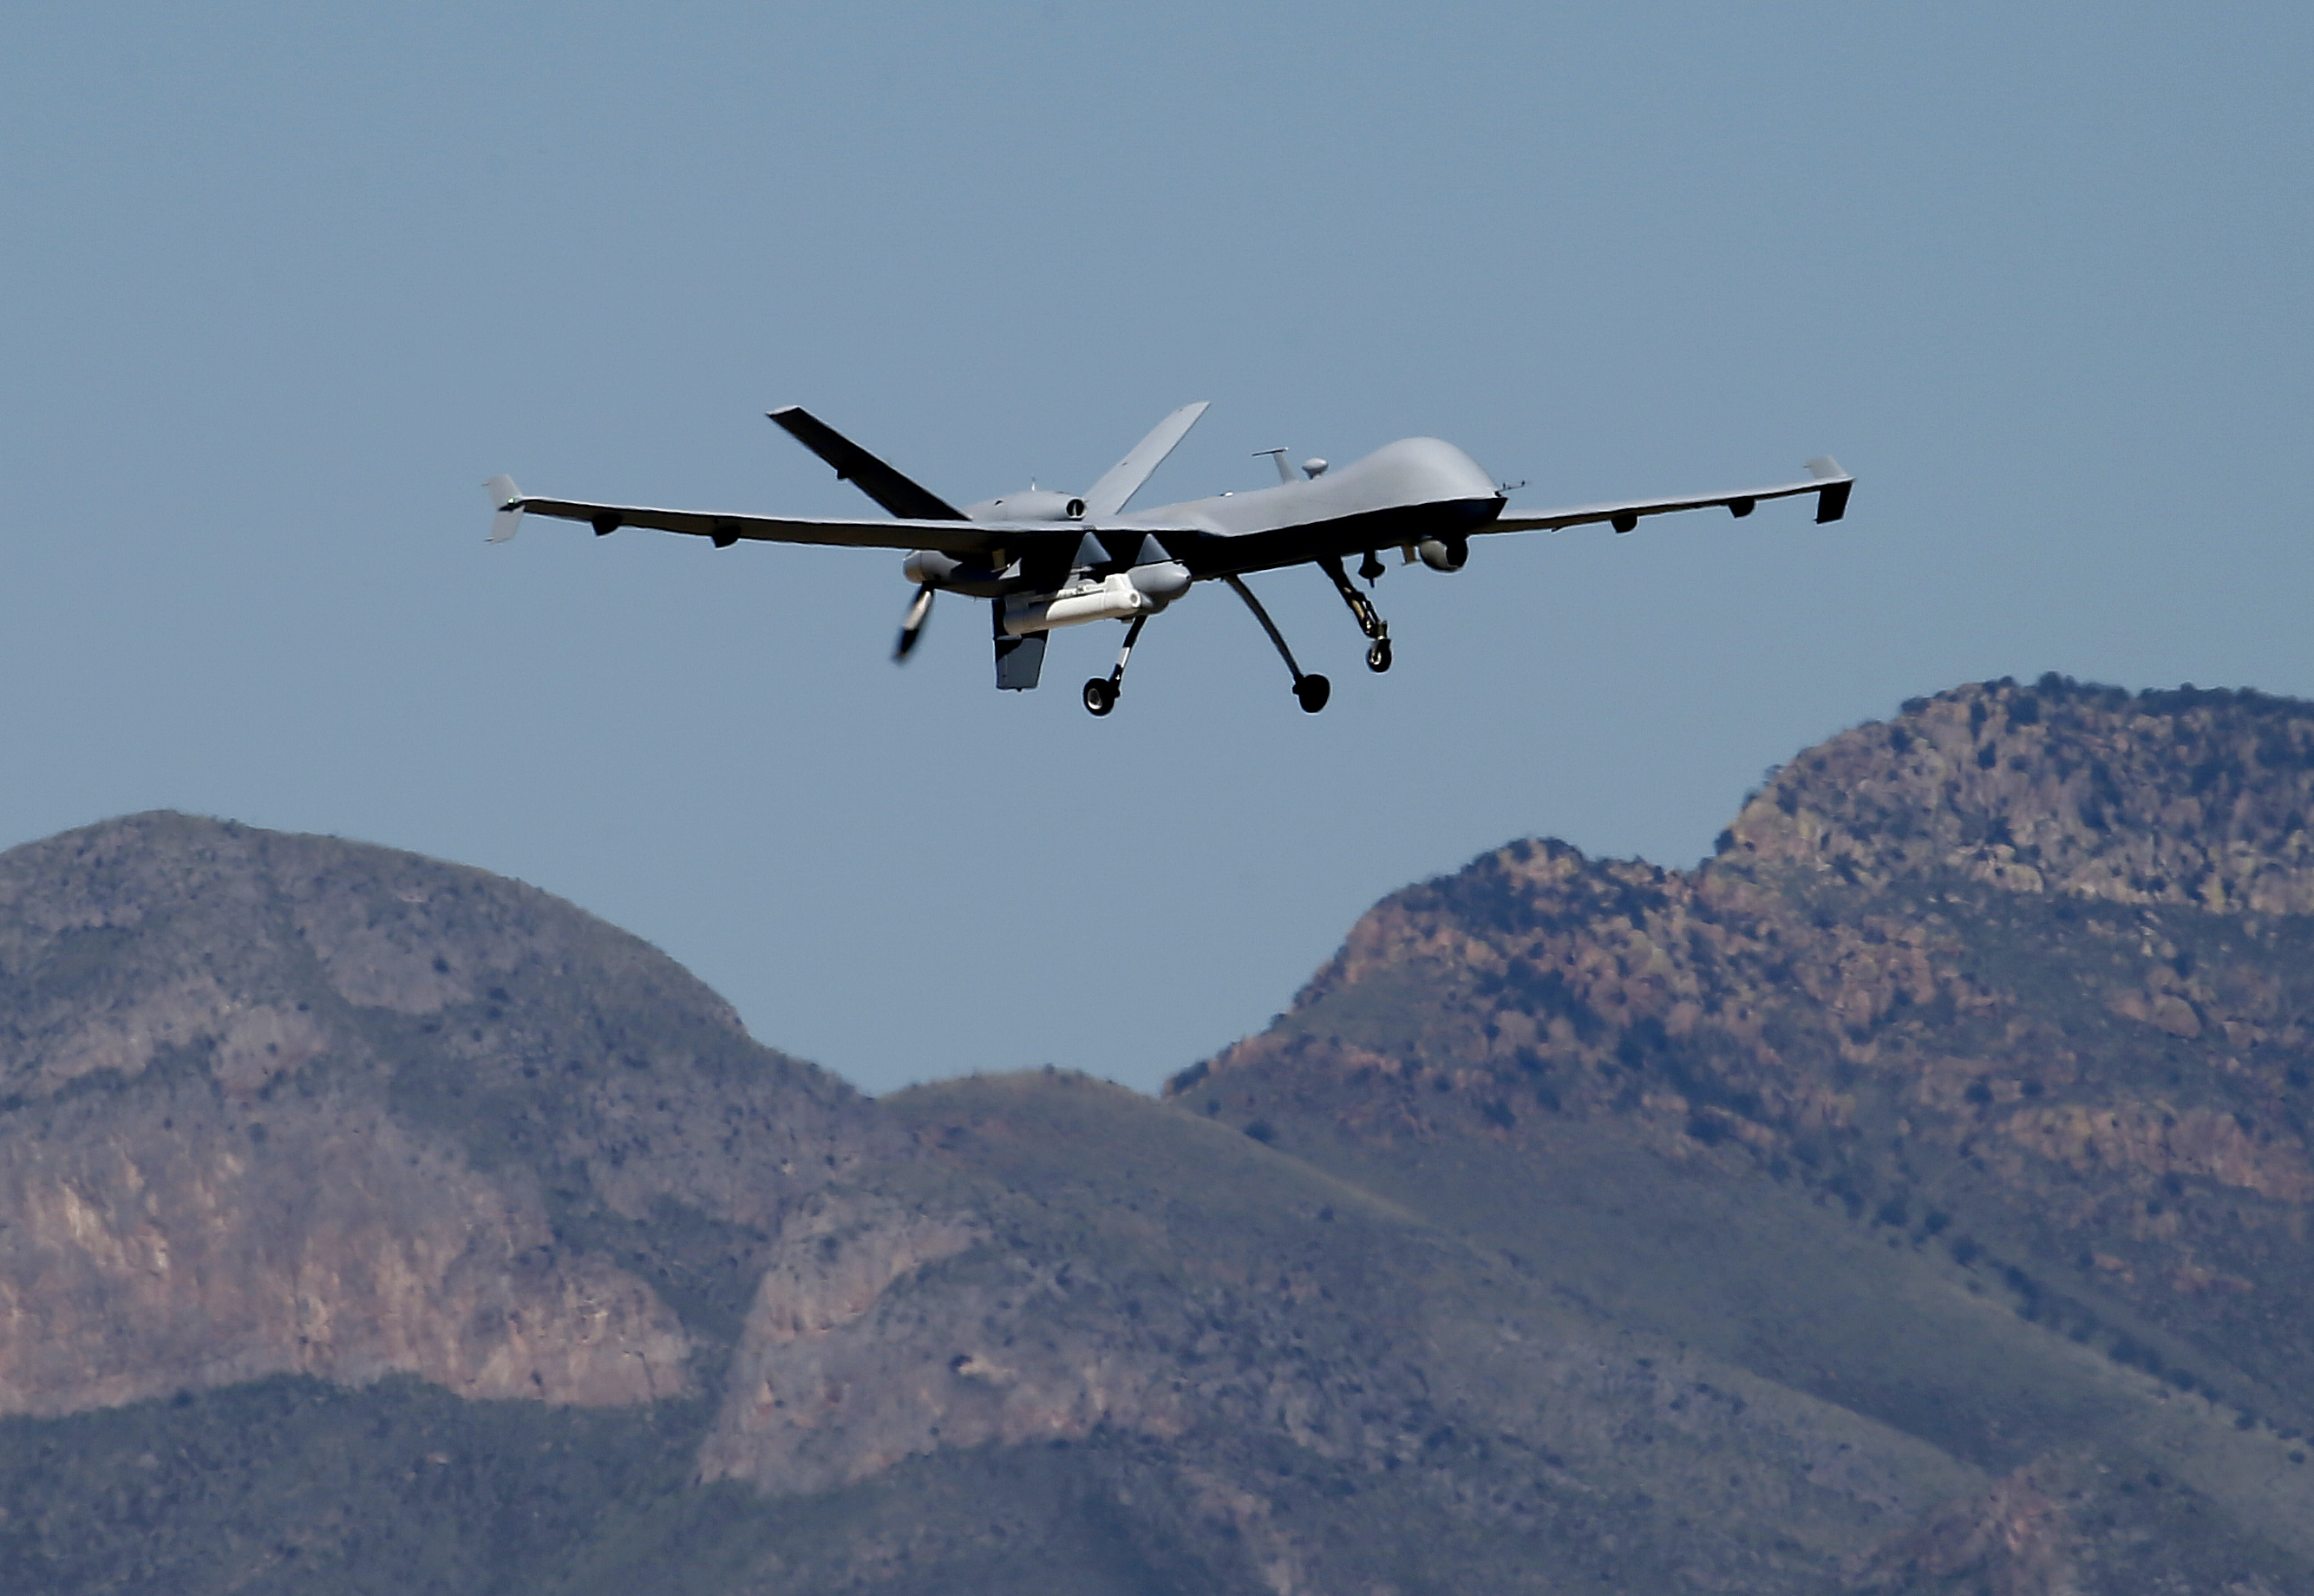 U.S. drones now patrol half of the Mexican border - CBS News